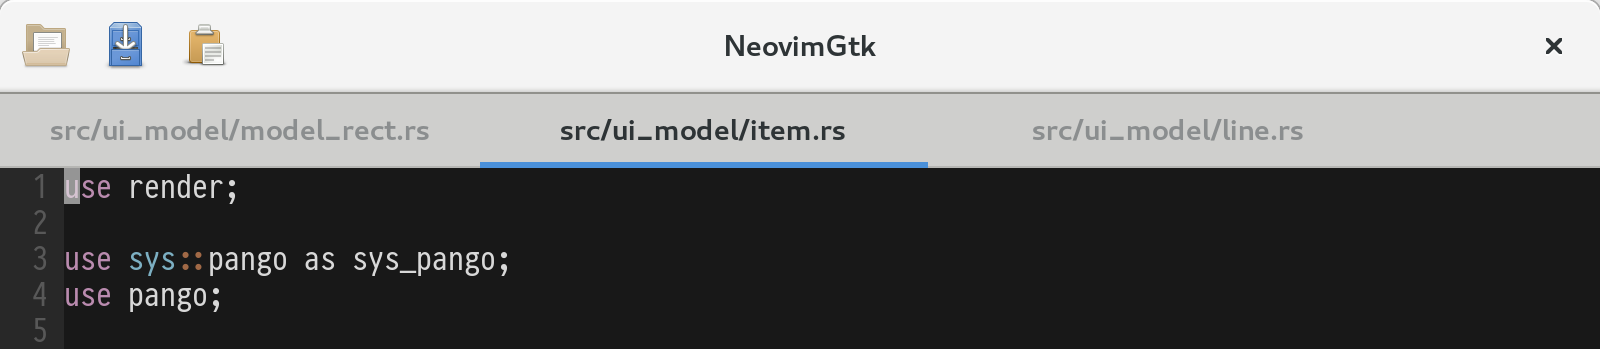 NeovimGtk displaying open tabs using a native tab control